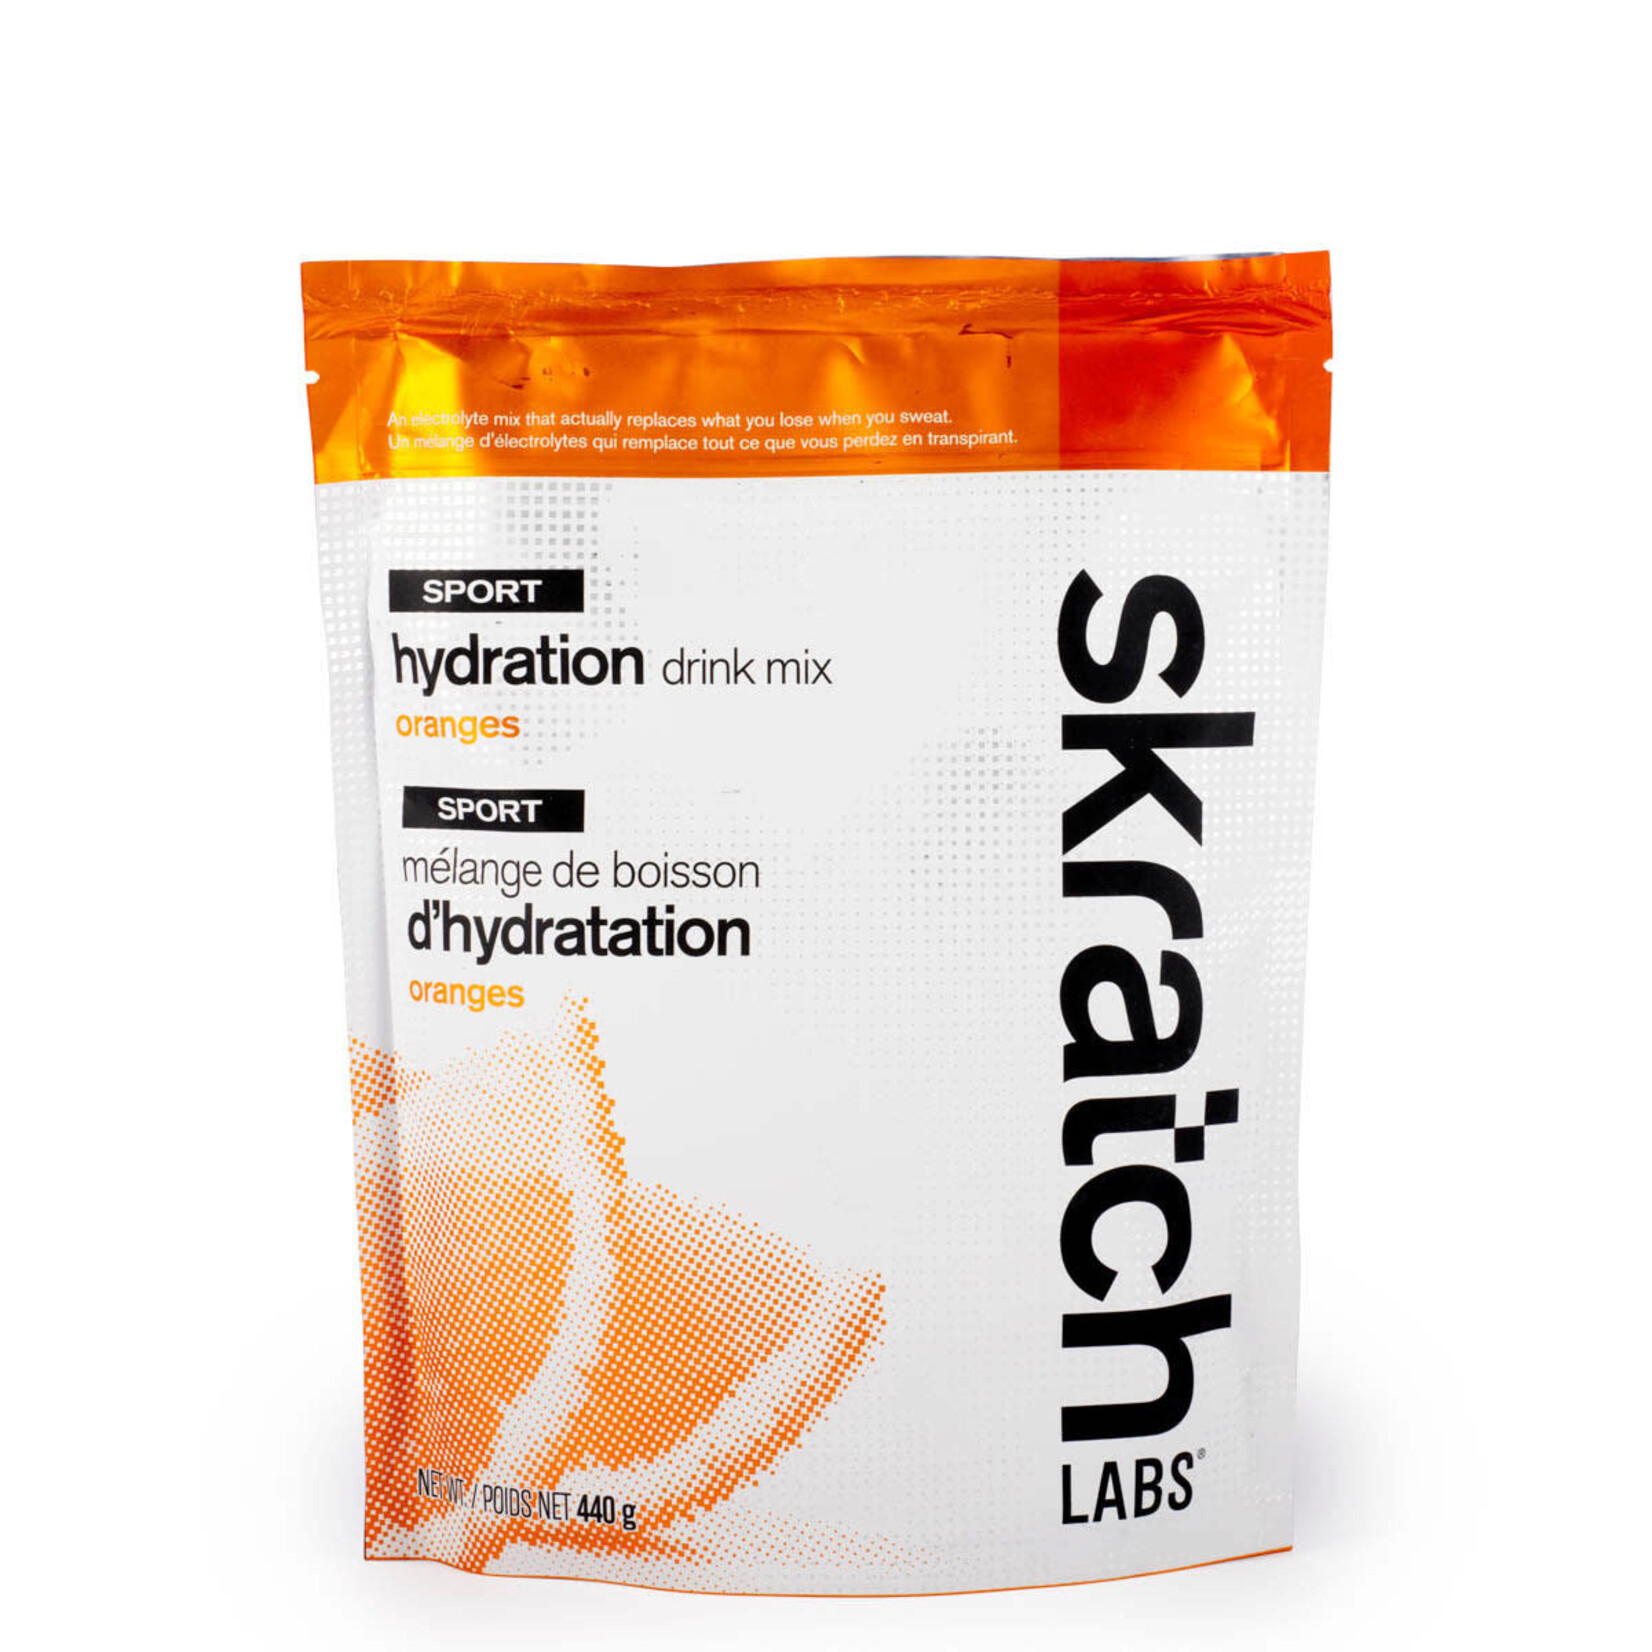 Skratch lab Sport Hydration Drink Mix, Oranges, 440g, 20-Serving